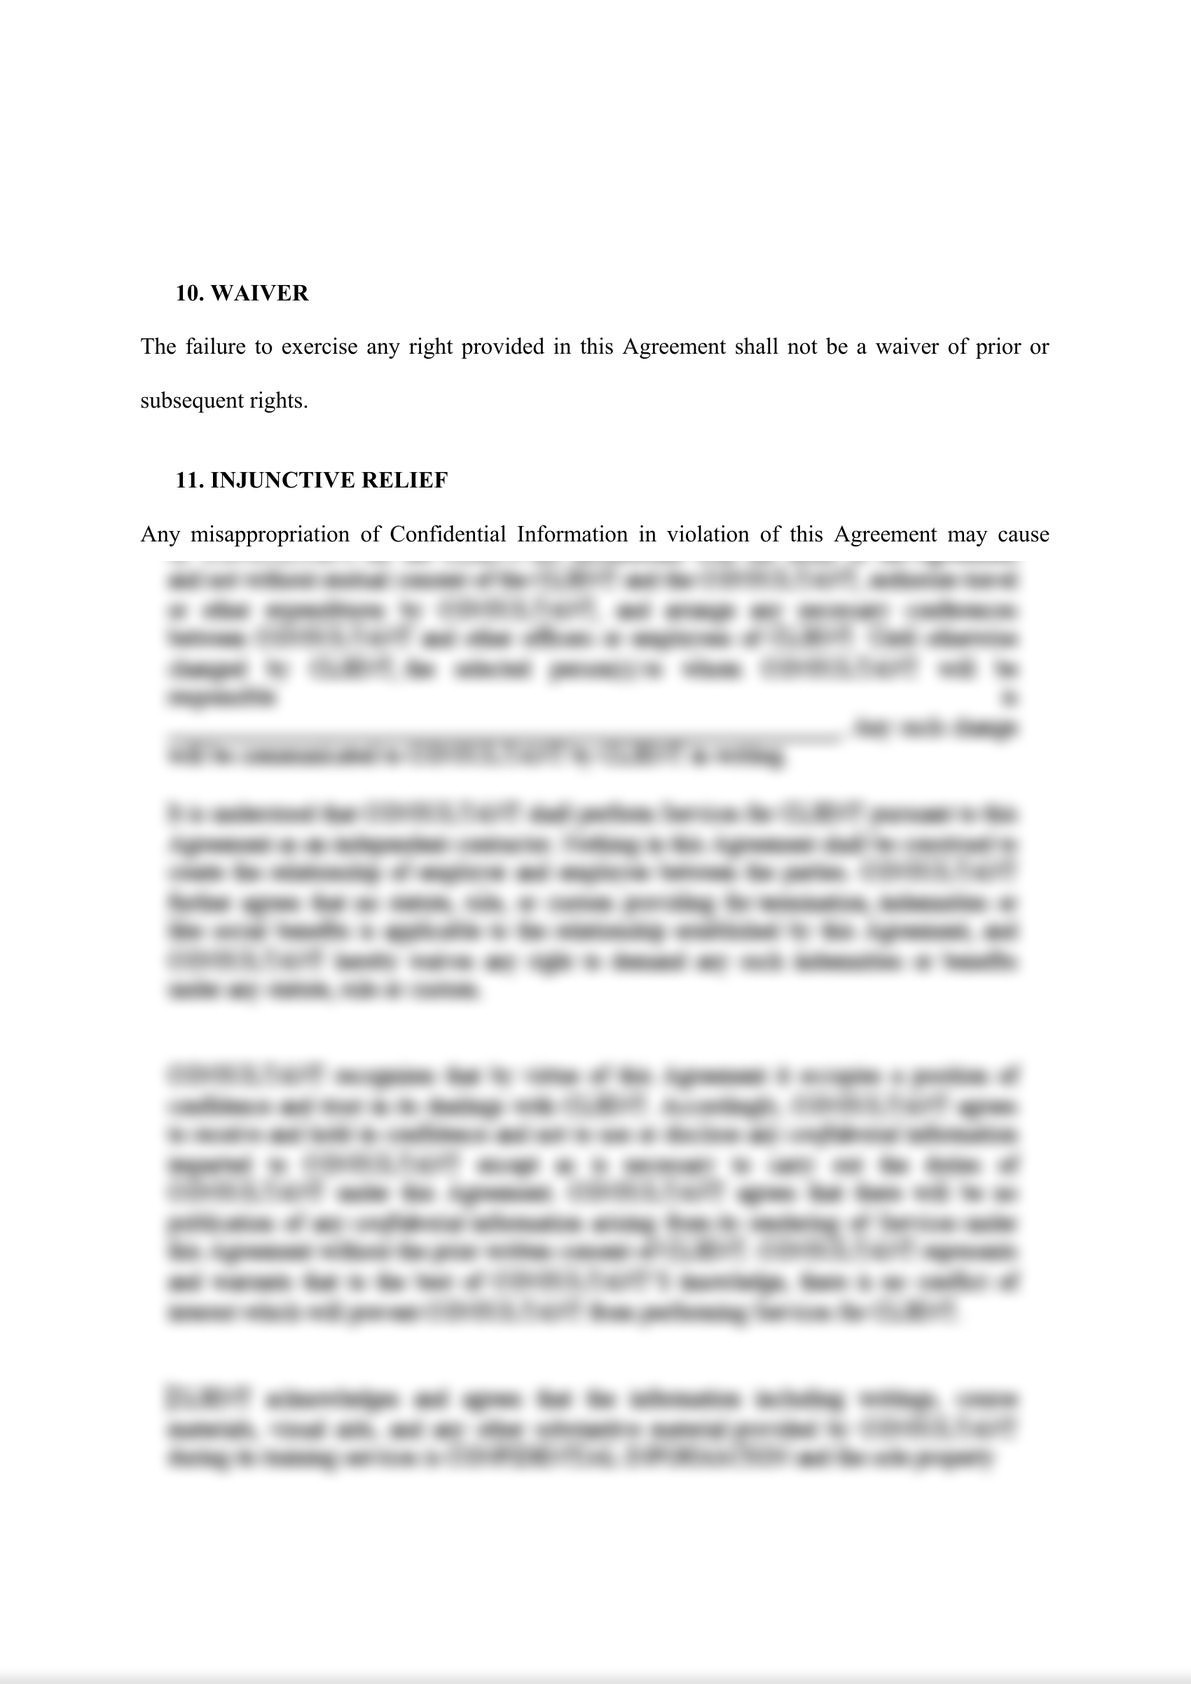 Non Disclosure and Non circumvention agreement-3